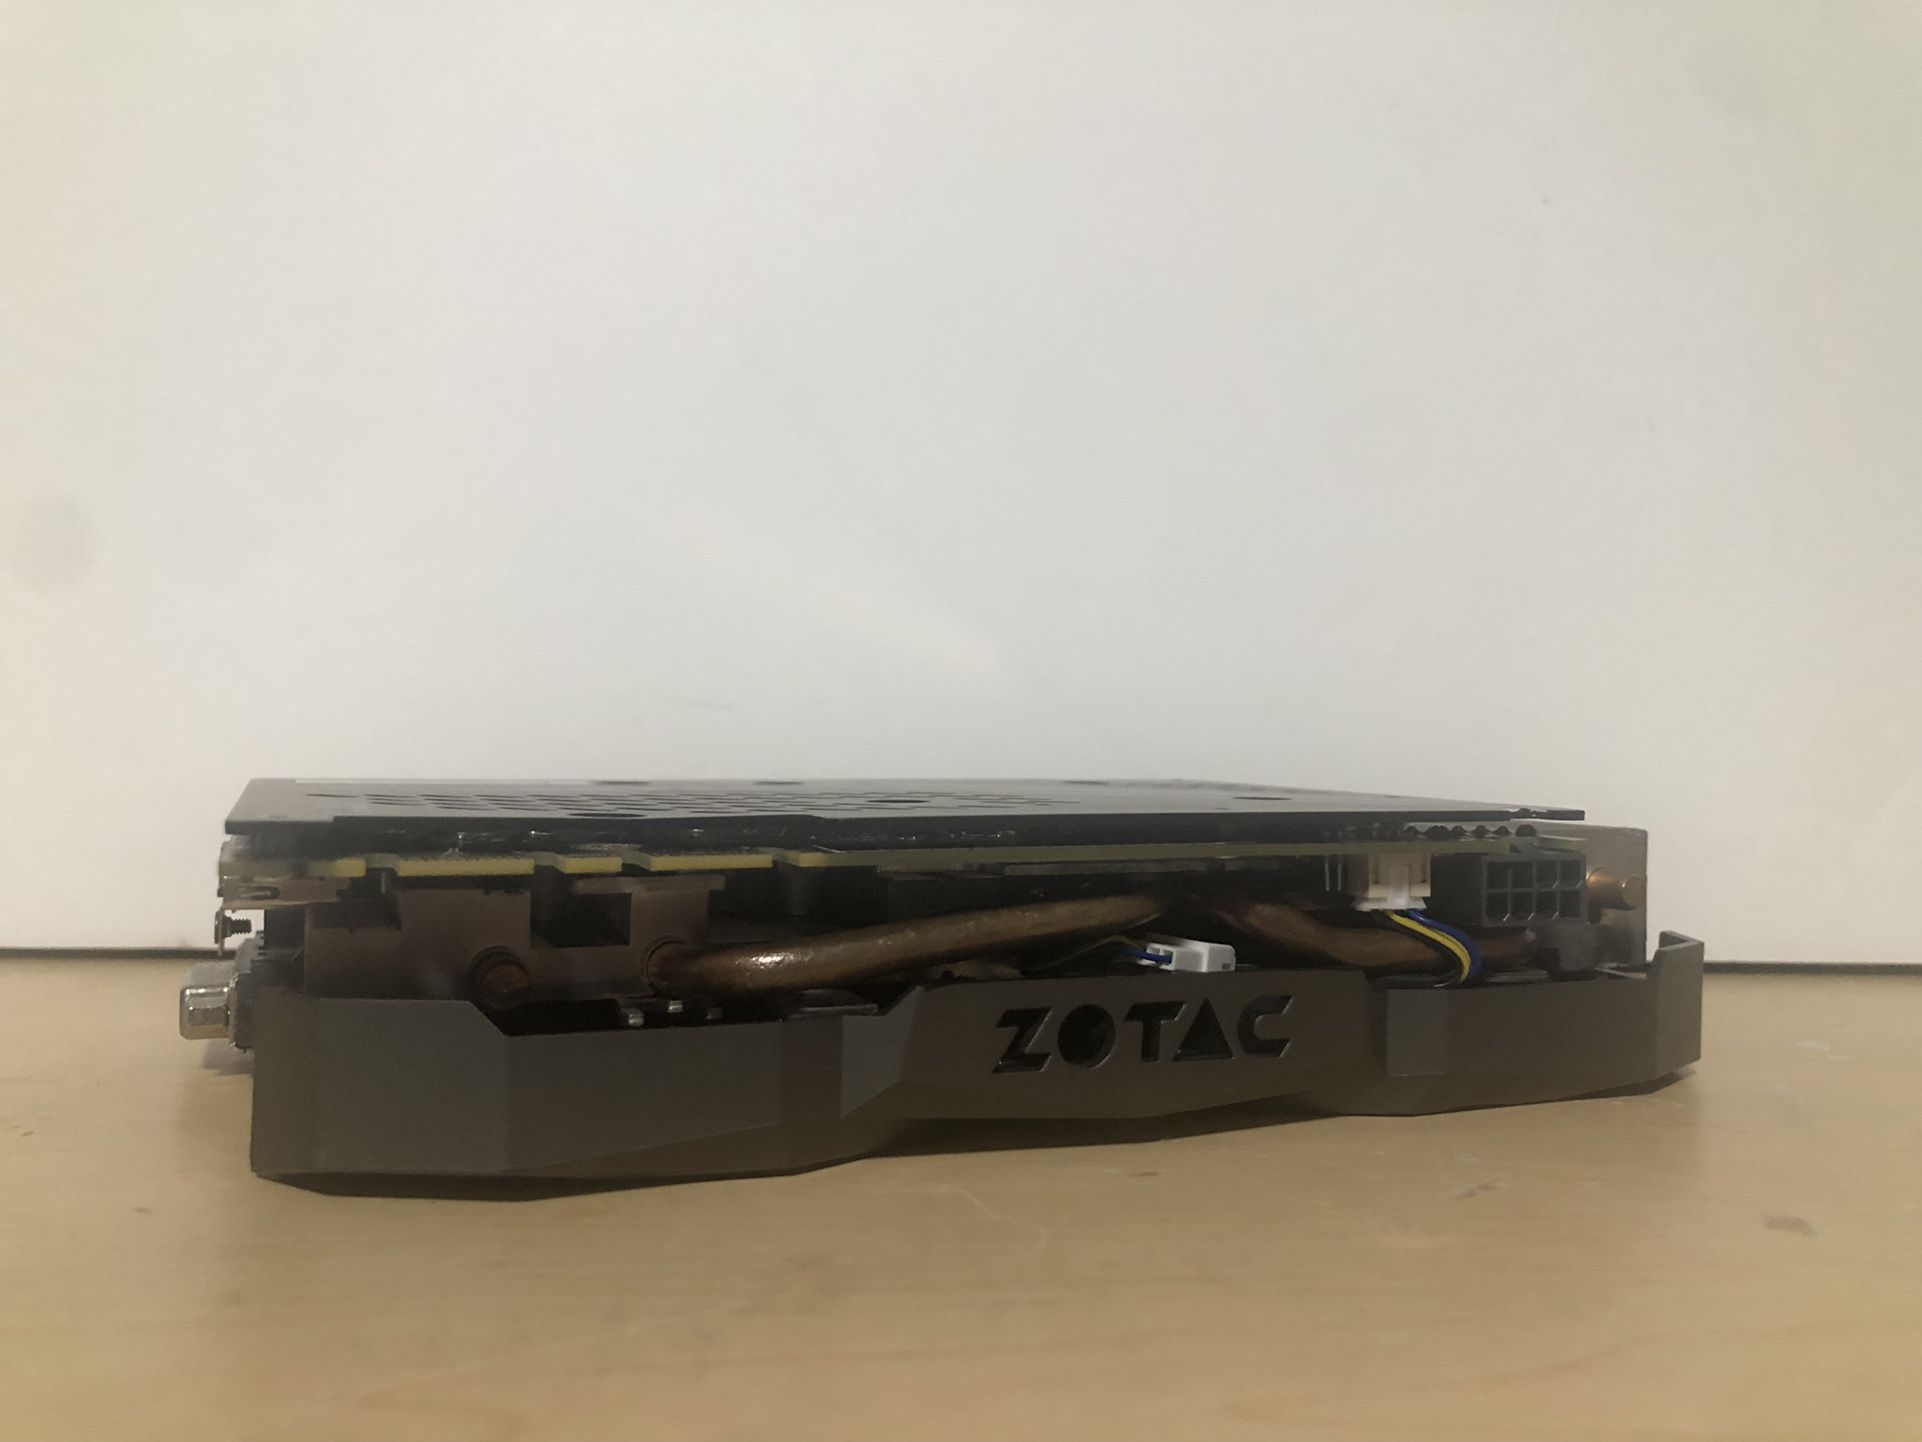 Zotac GTX 1070 Ti Mini - Parts